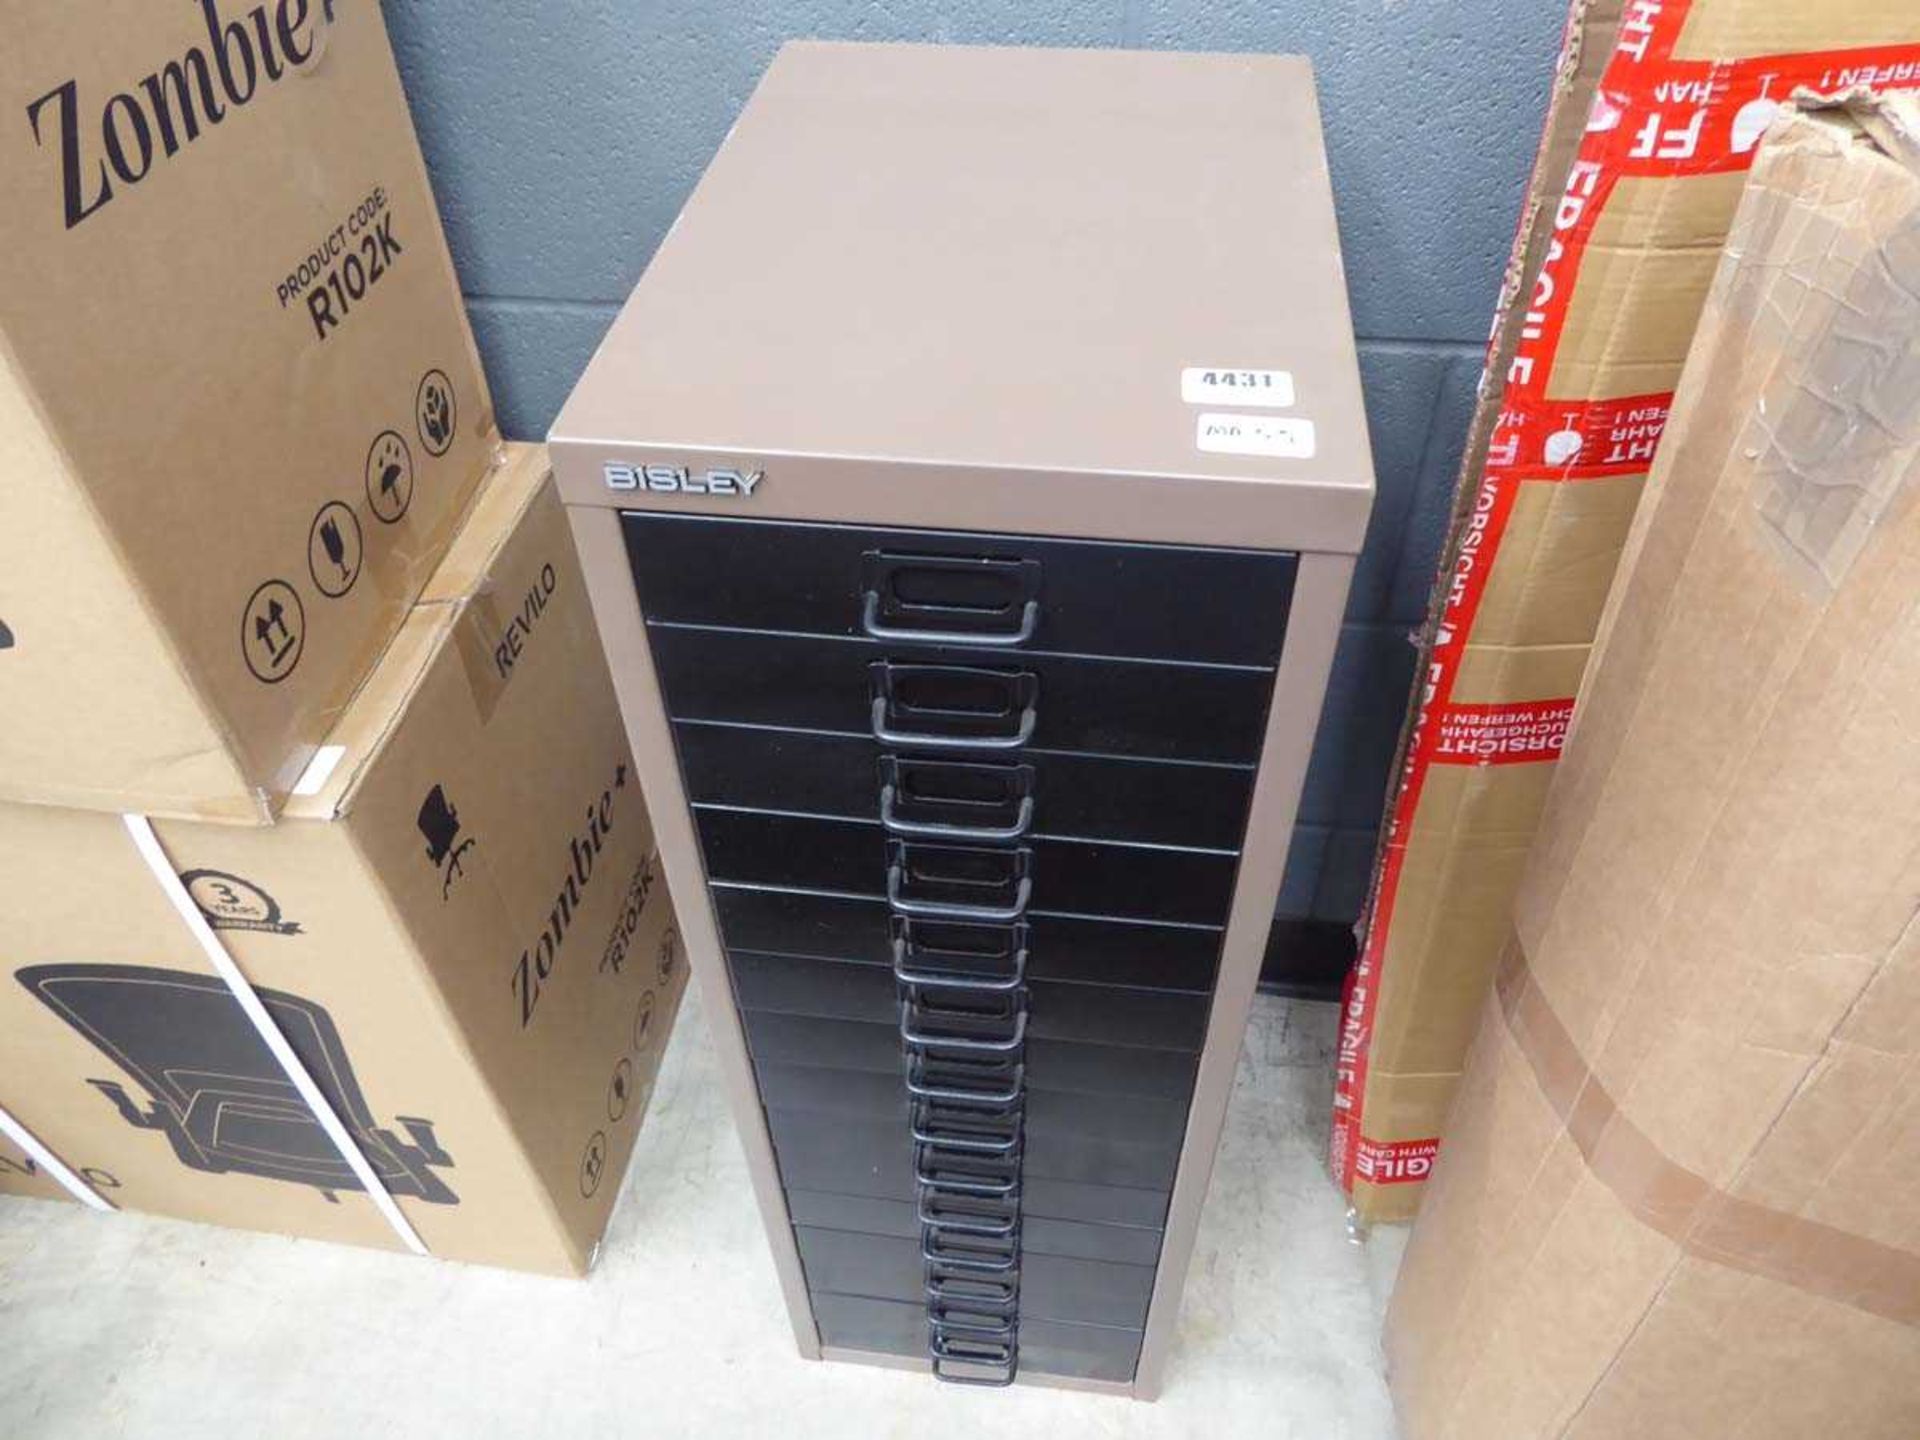 Bisley black and brown multi drawer filing cabinet